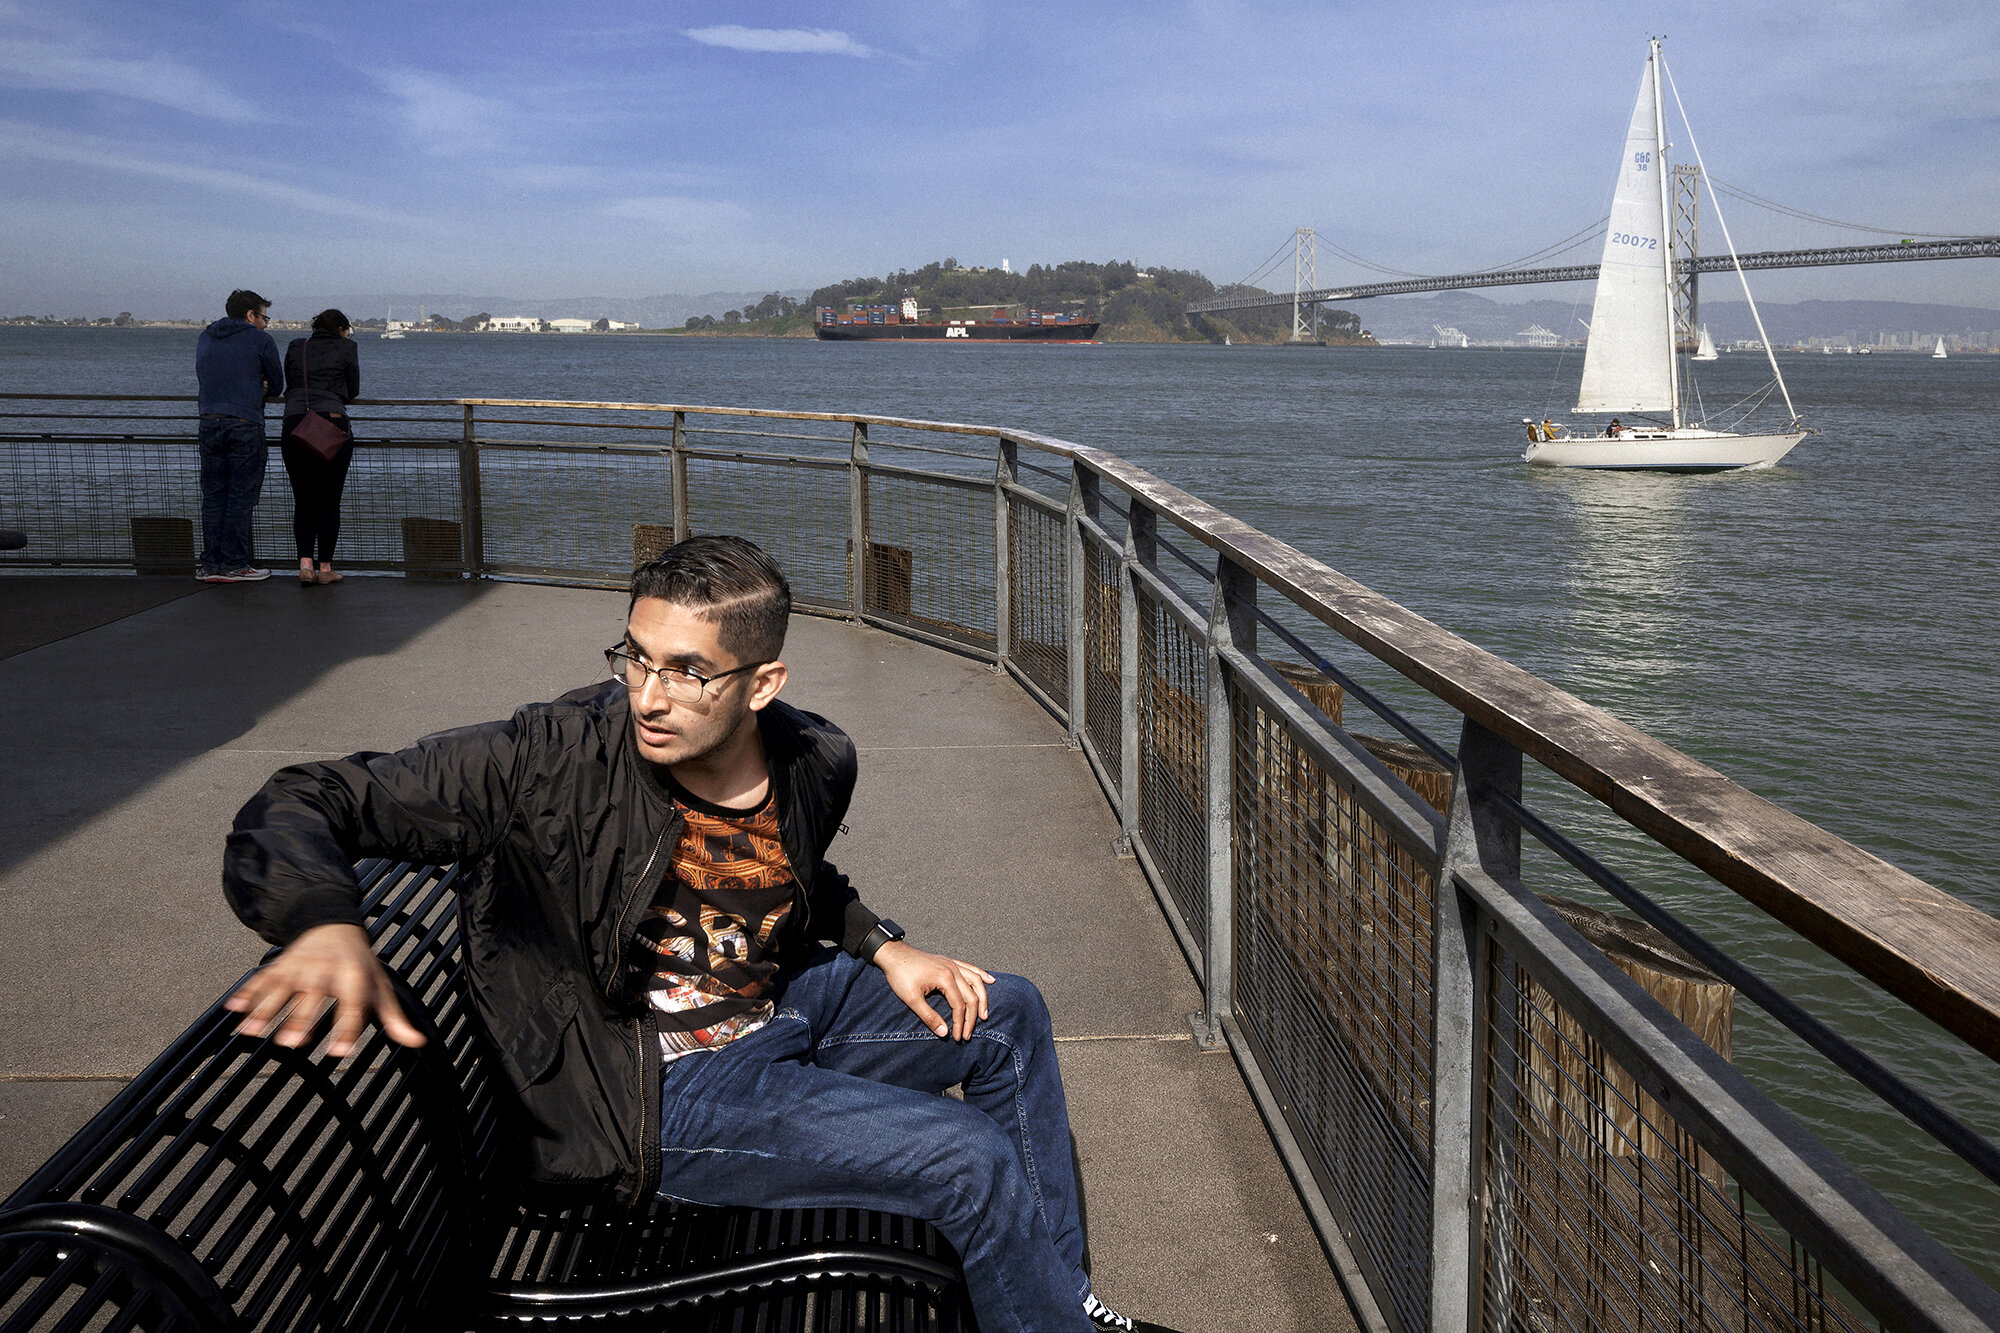   USA. San Francisco, California. 2018. Basil Rizwan, 19, at Pier 1, The Embarcadero, during a visit with friends to the tourist hotspots of San Francisco.        